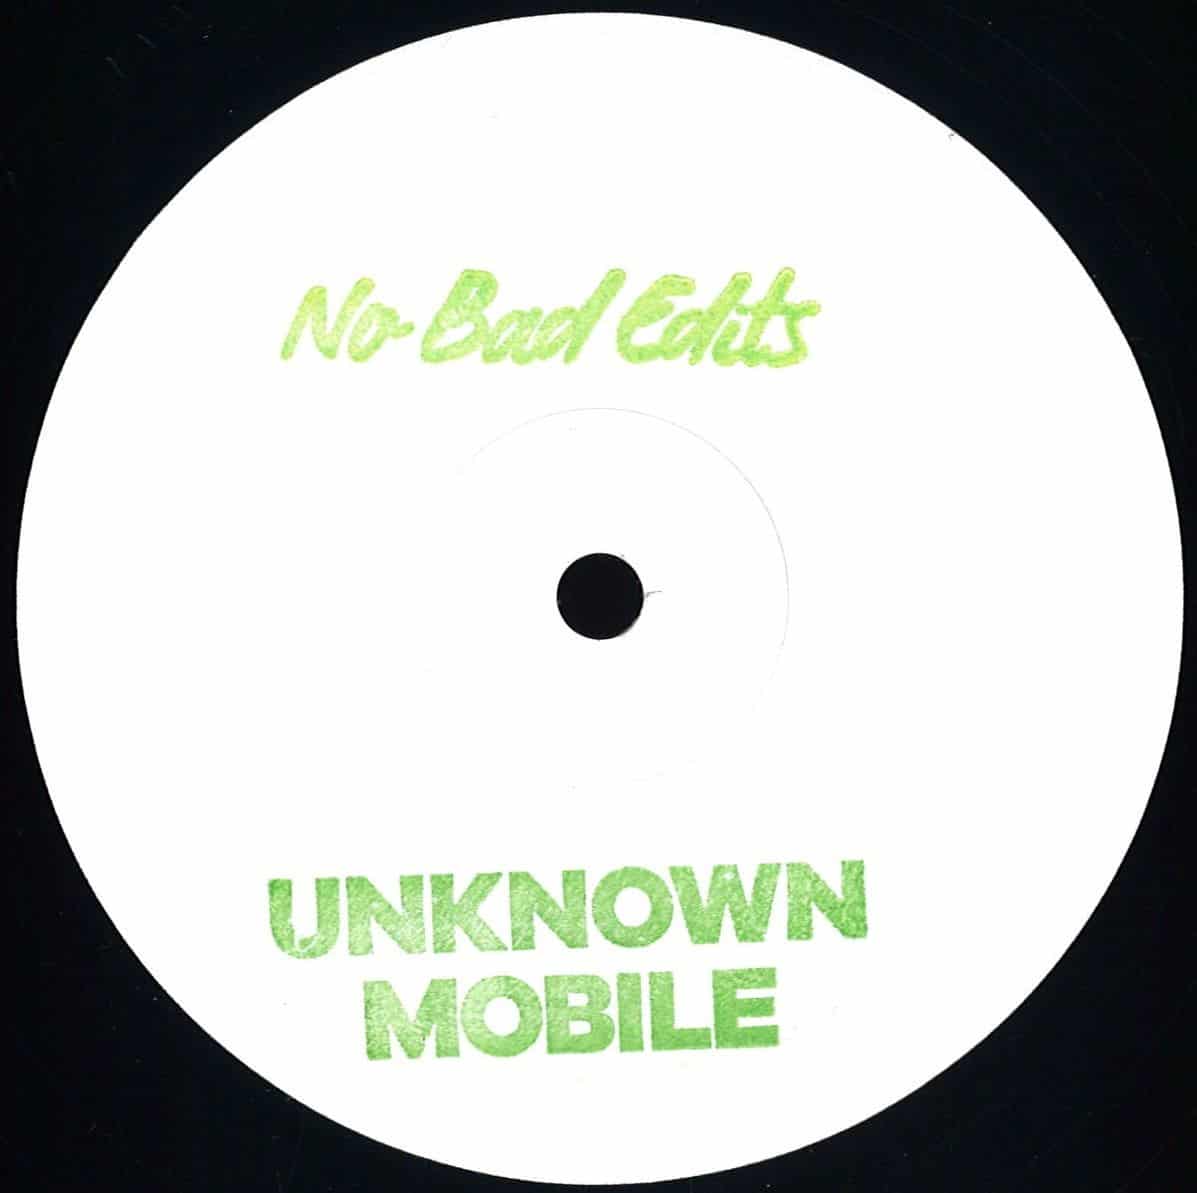 Unknown Mobile - No Bad Edits 002 - NBE002 - NO BAD EDITS